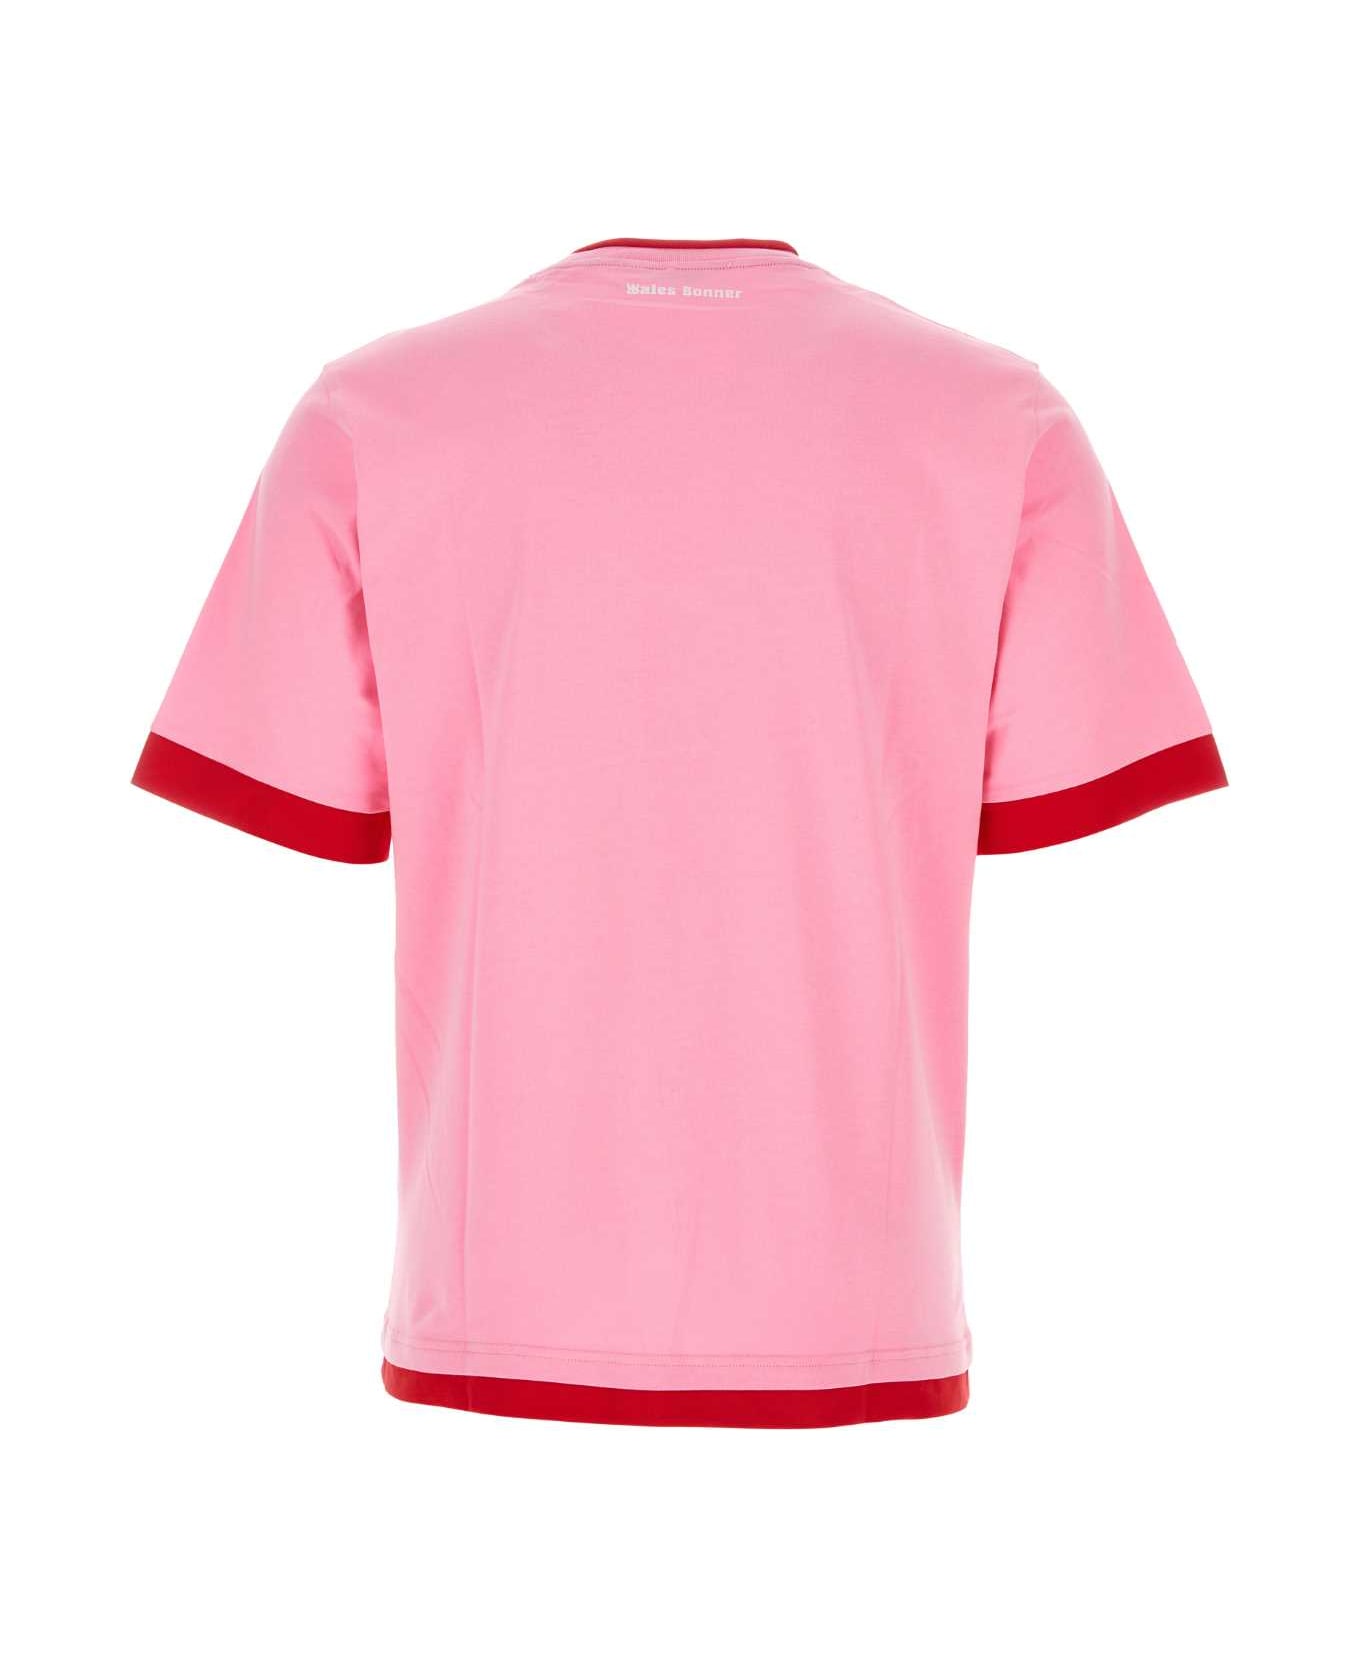 Wales Bonner Pink Cotton Marathon T-shirt - PINKANDRED シャツ